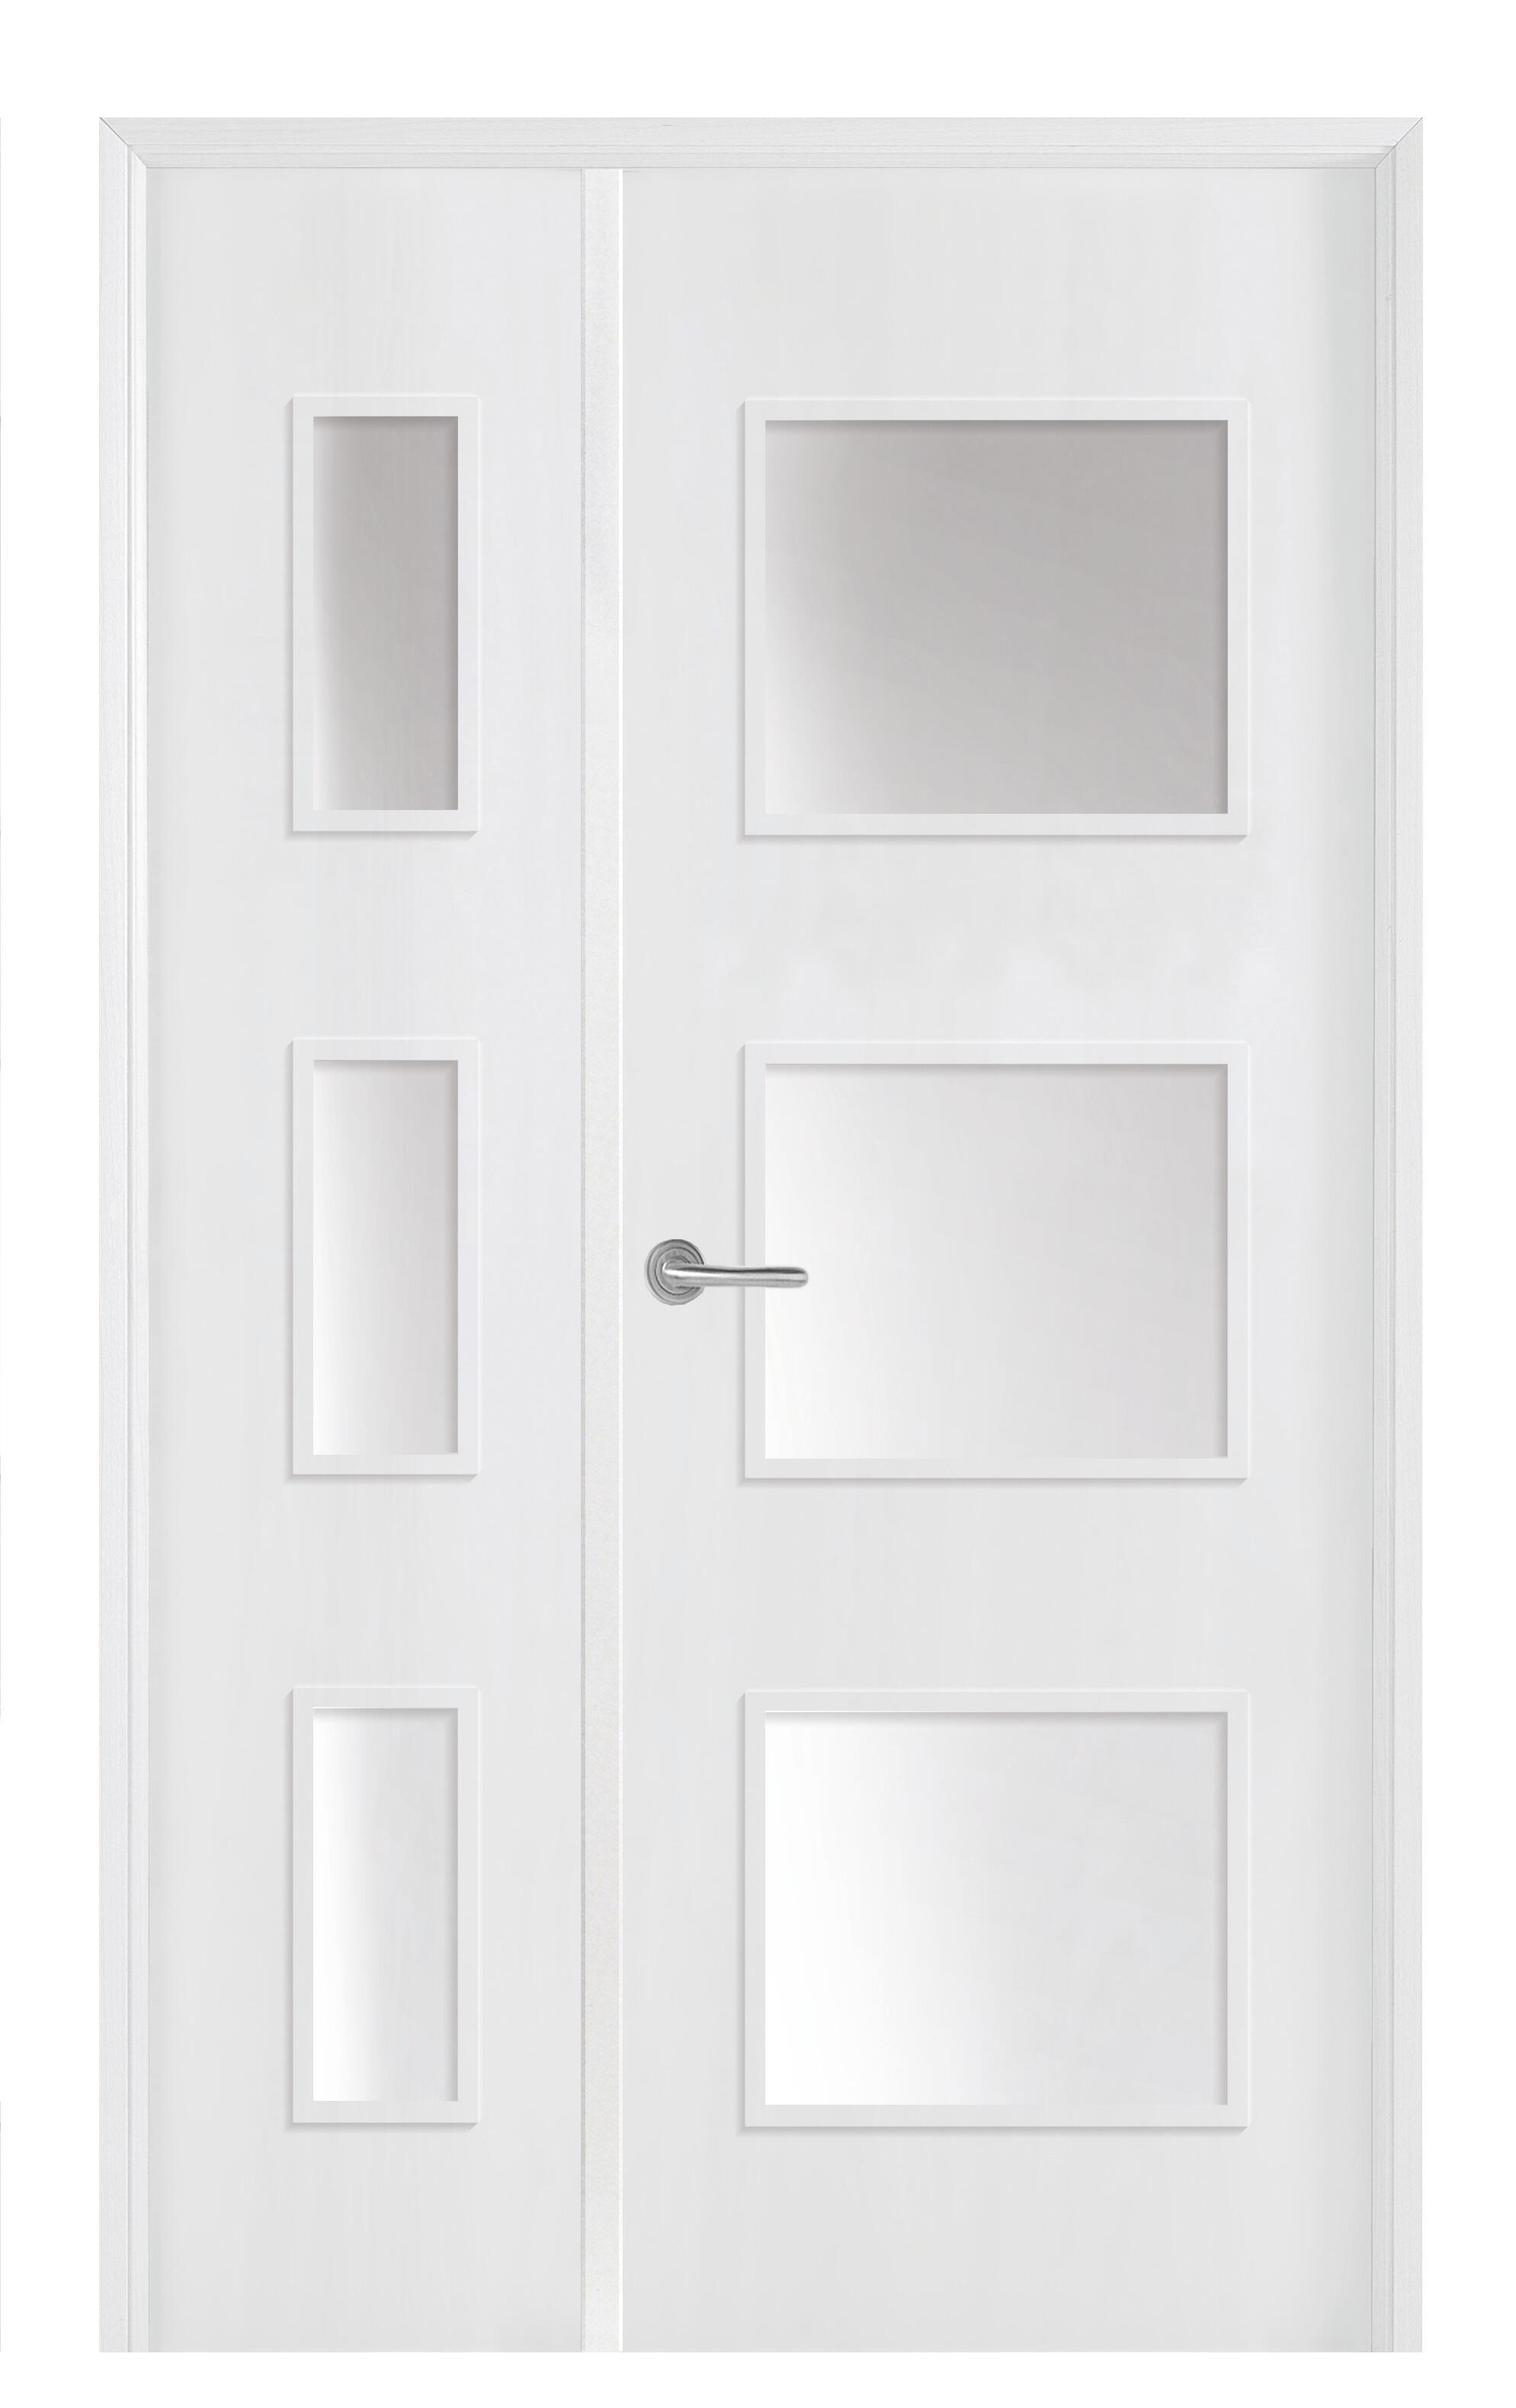 Puerta doble con cristal bari plus blanca 6x2x115cm d